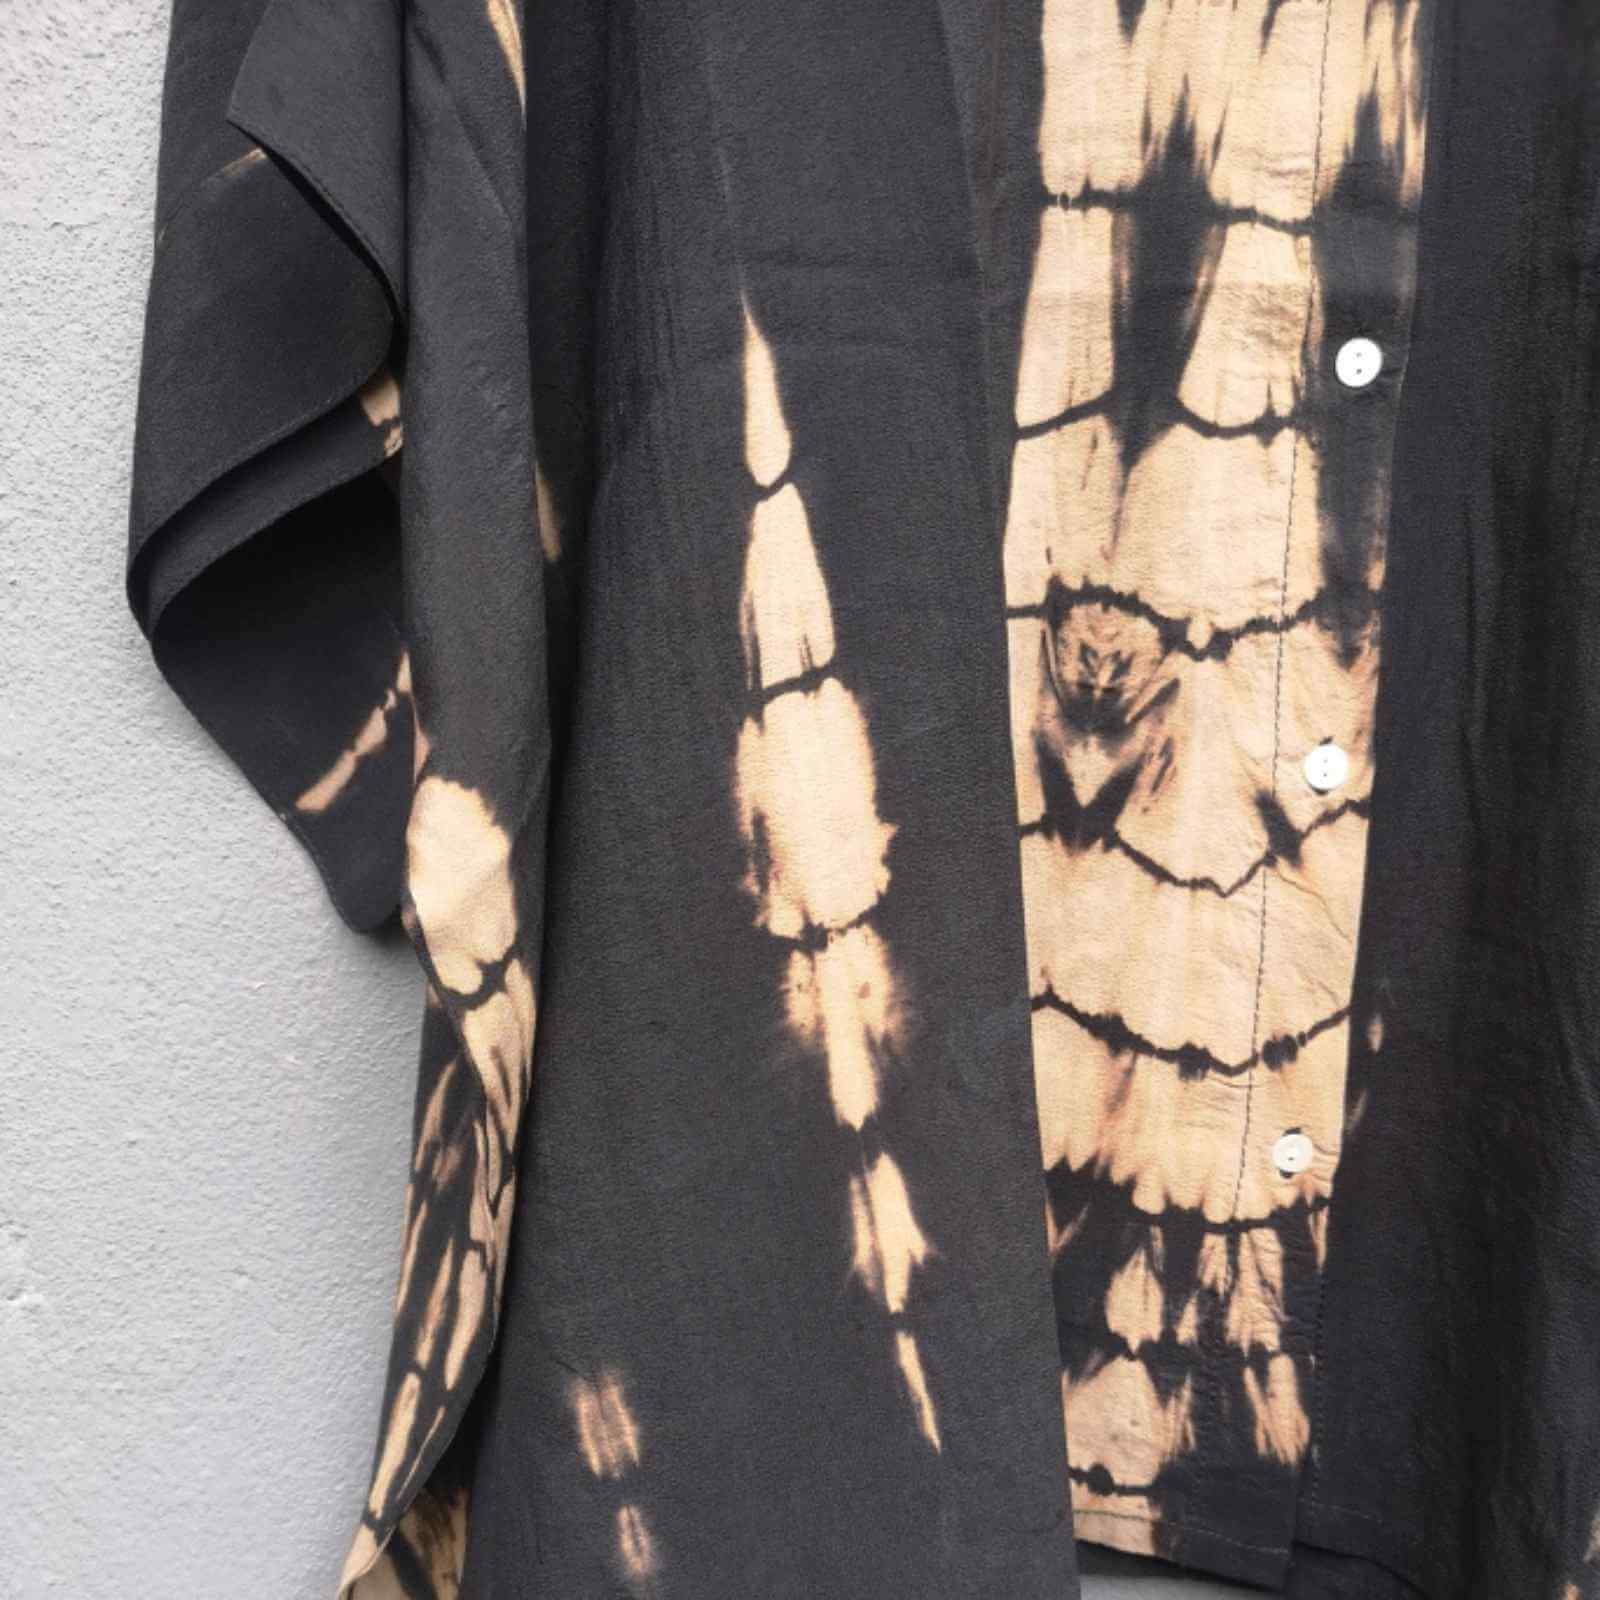 sort og brunt mønster på silke skjorte fra Cofur